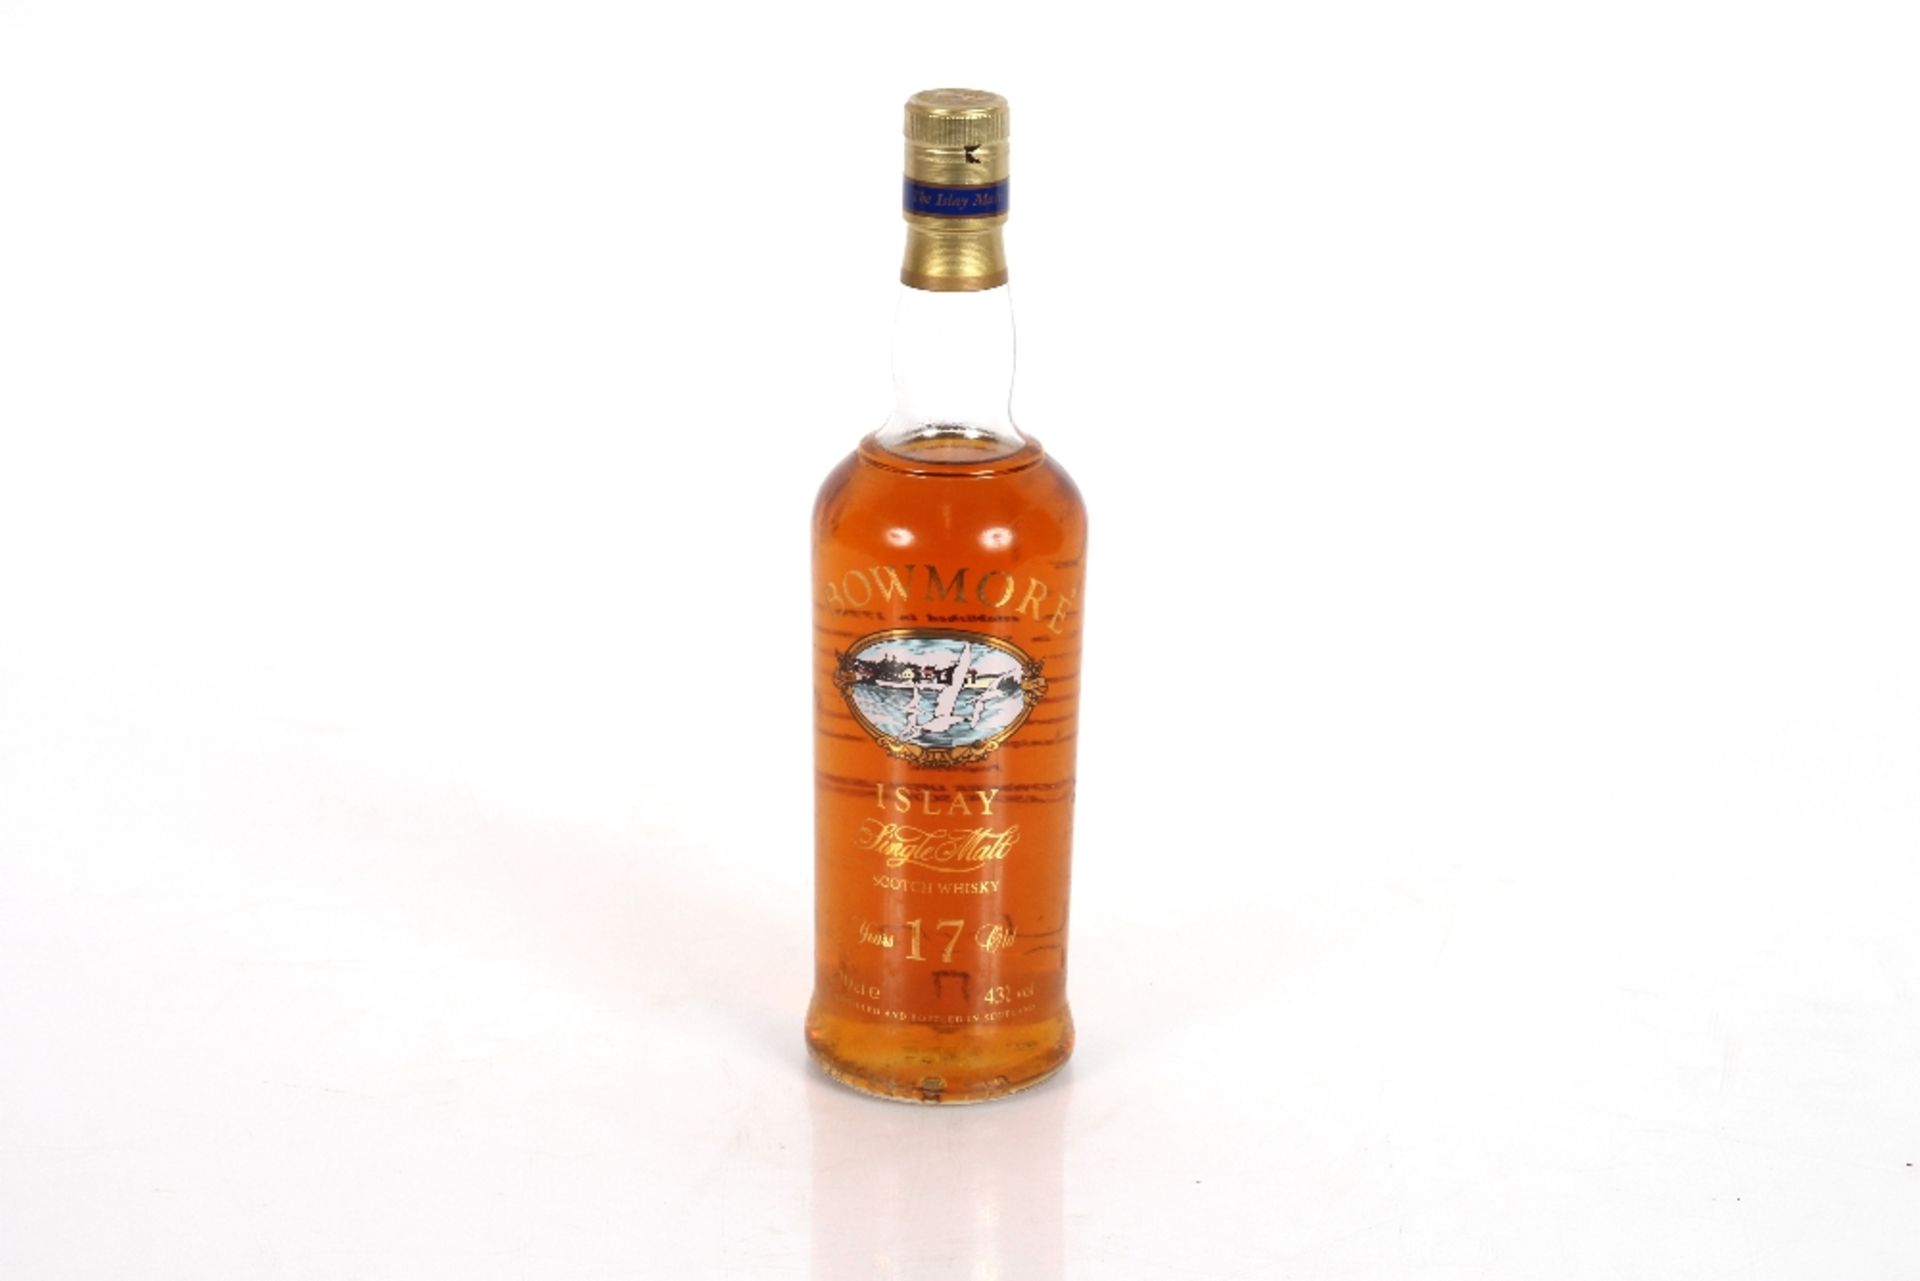 Bowmore Islay, single malt Scotch whisky, 17 years old, 70cl, 43%